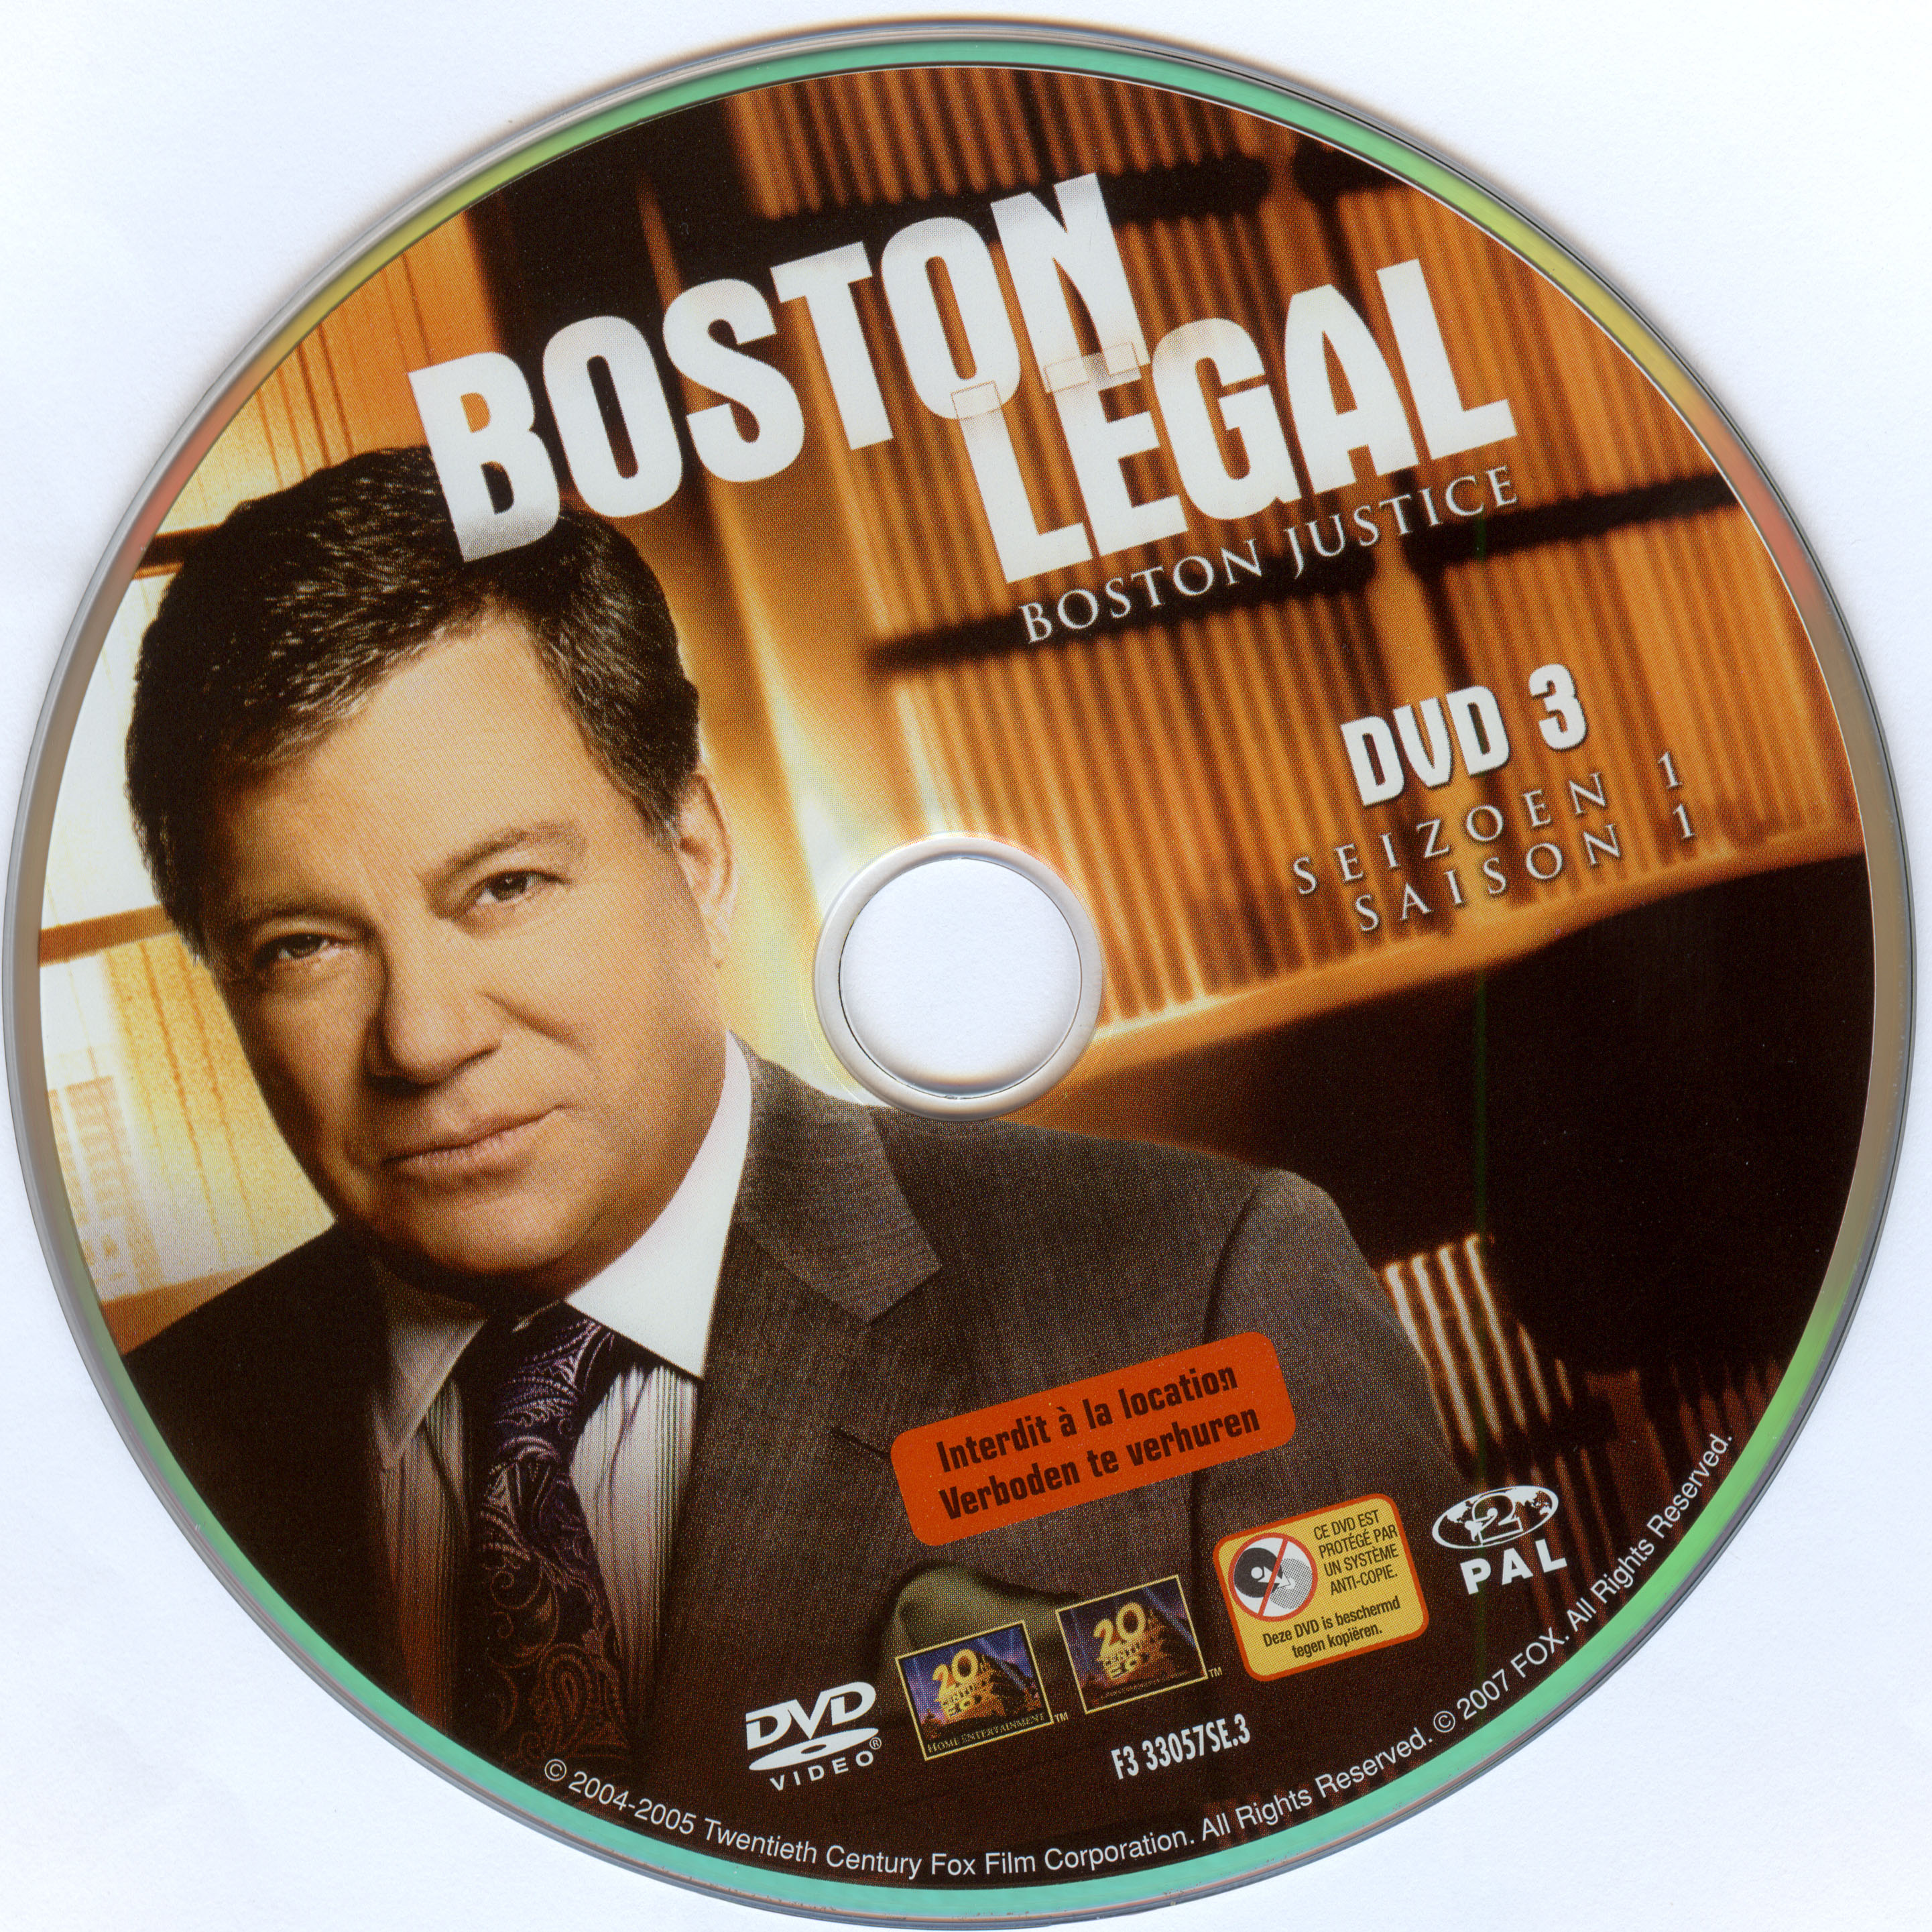 Boston legal - Boston justice Saison 1 DISC 3